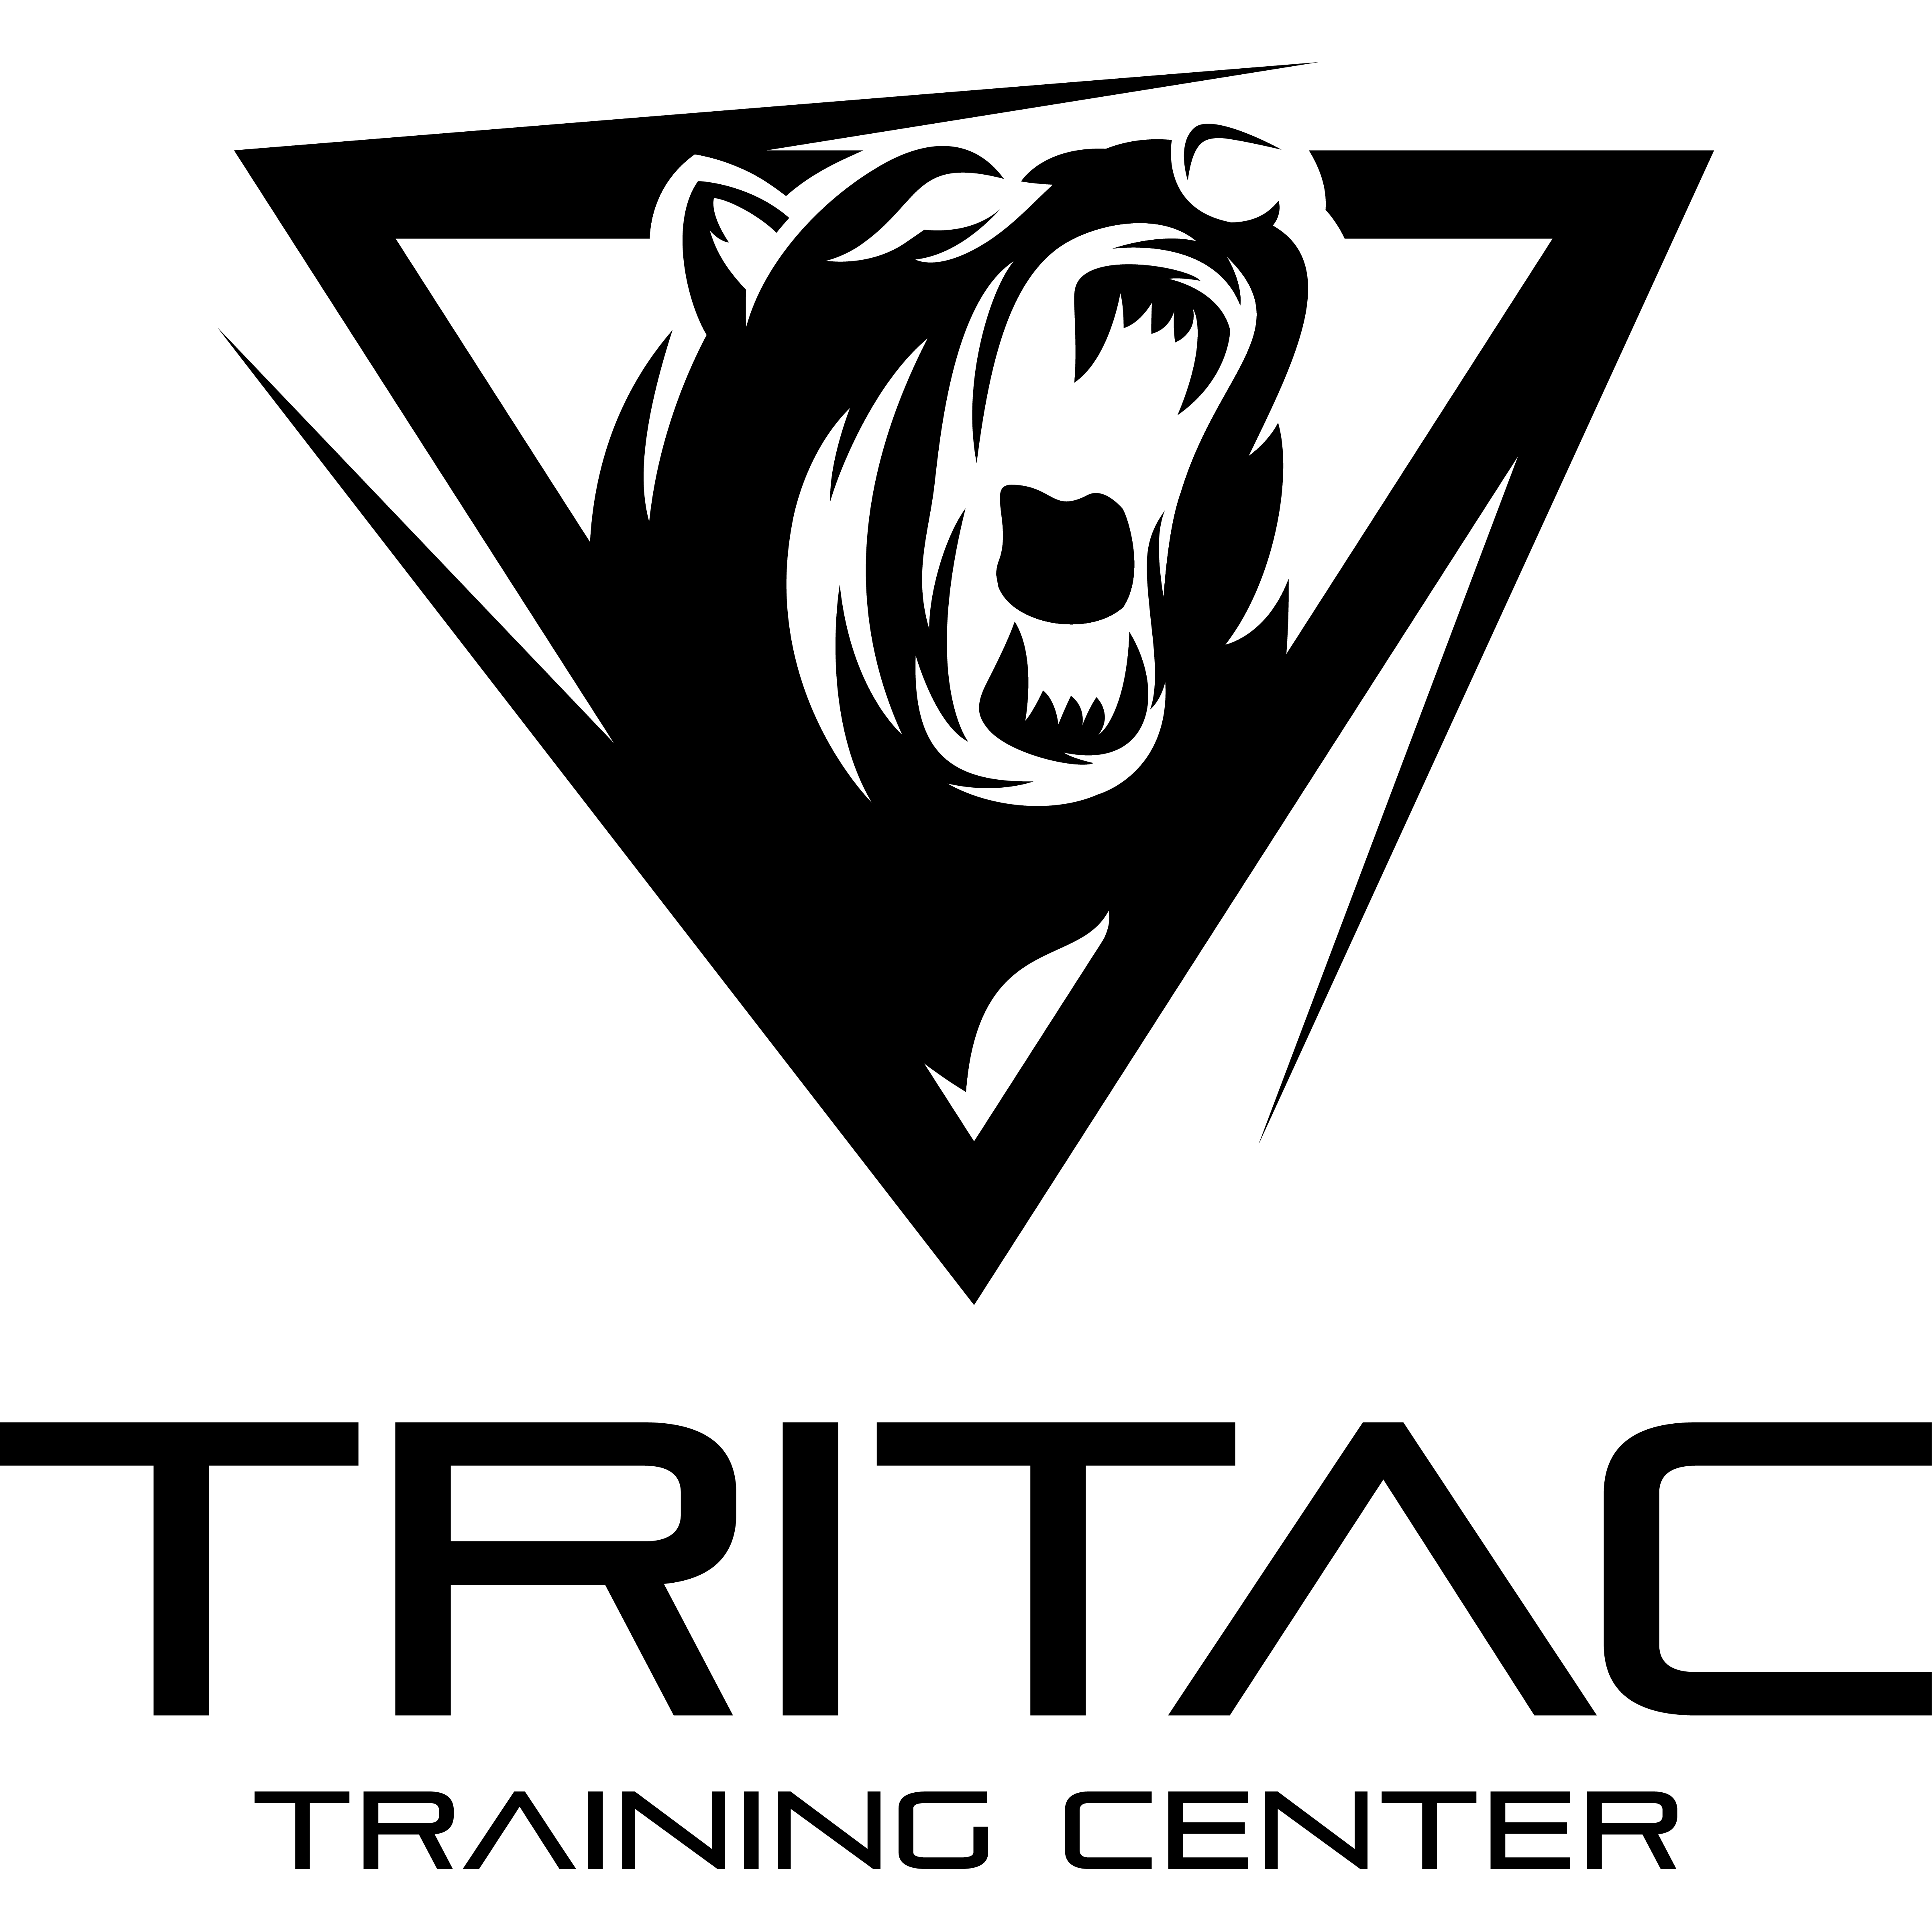 TRITAC Training Center - Cromwell, CT 06416 - (860)740-4132 | ShowMeLocal.com